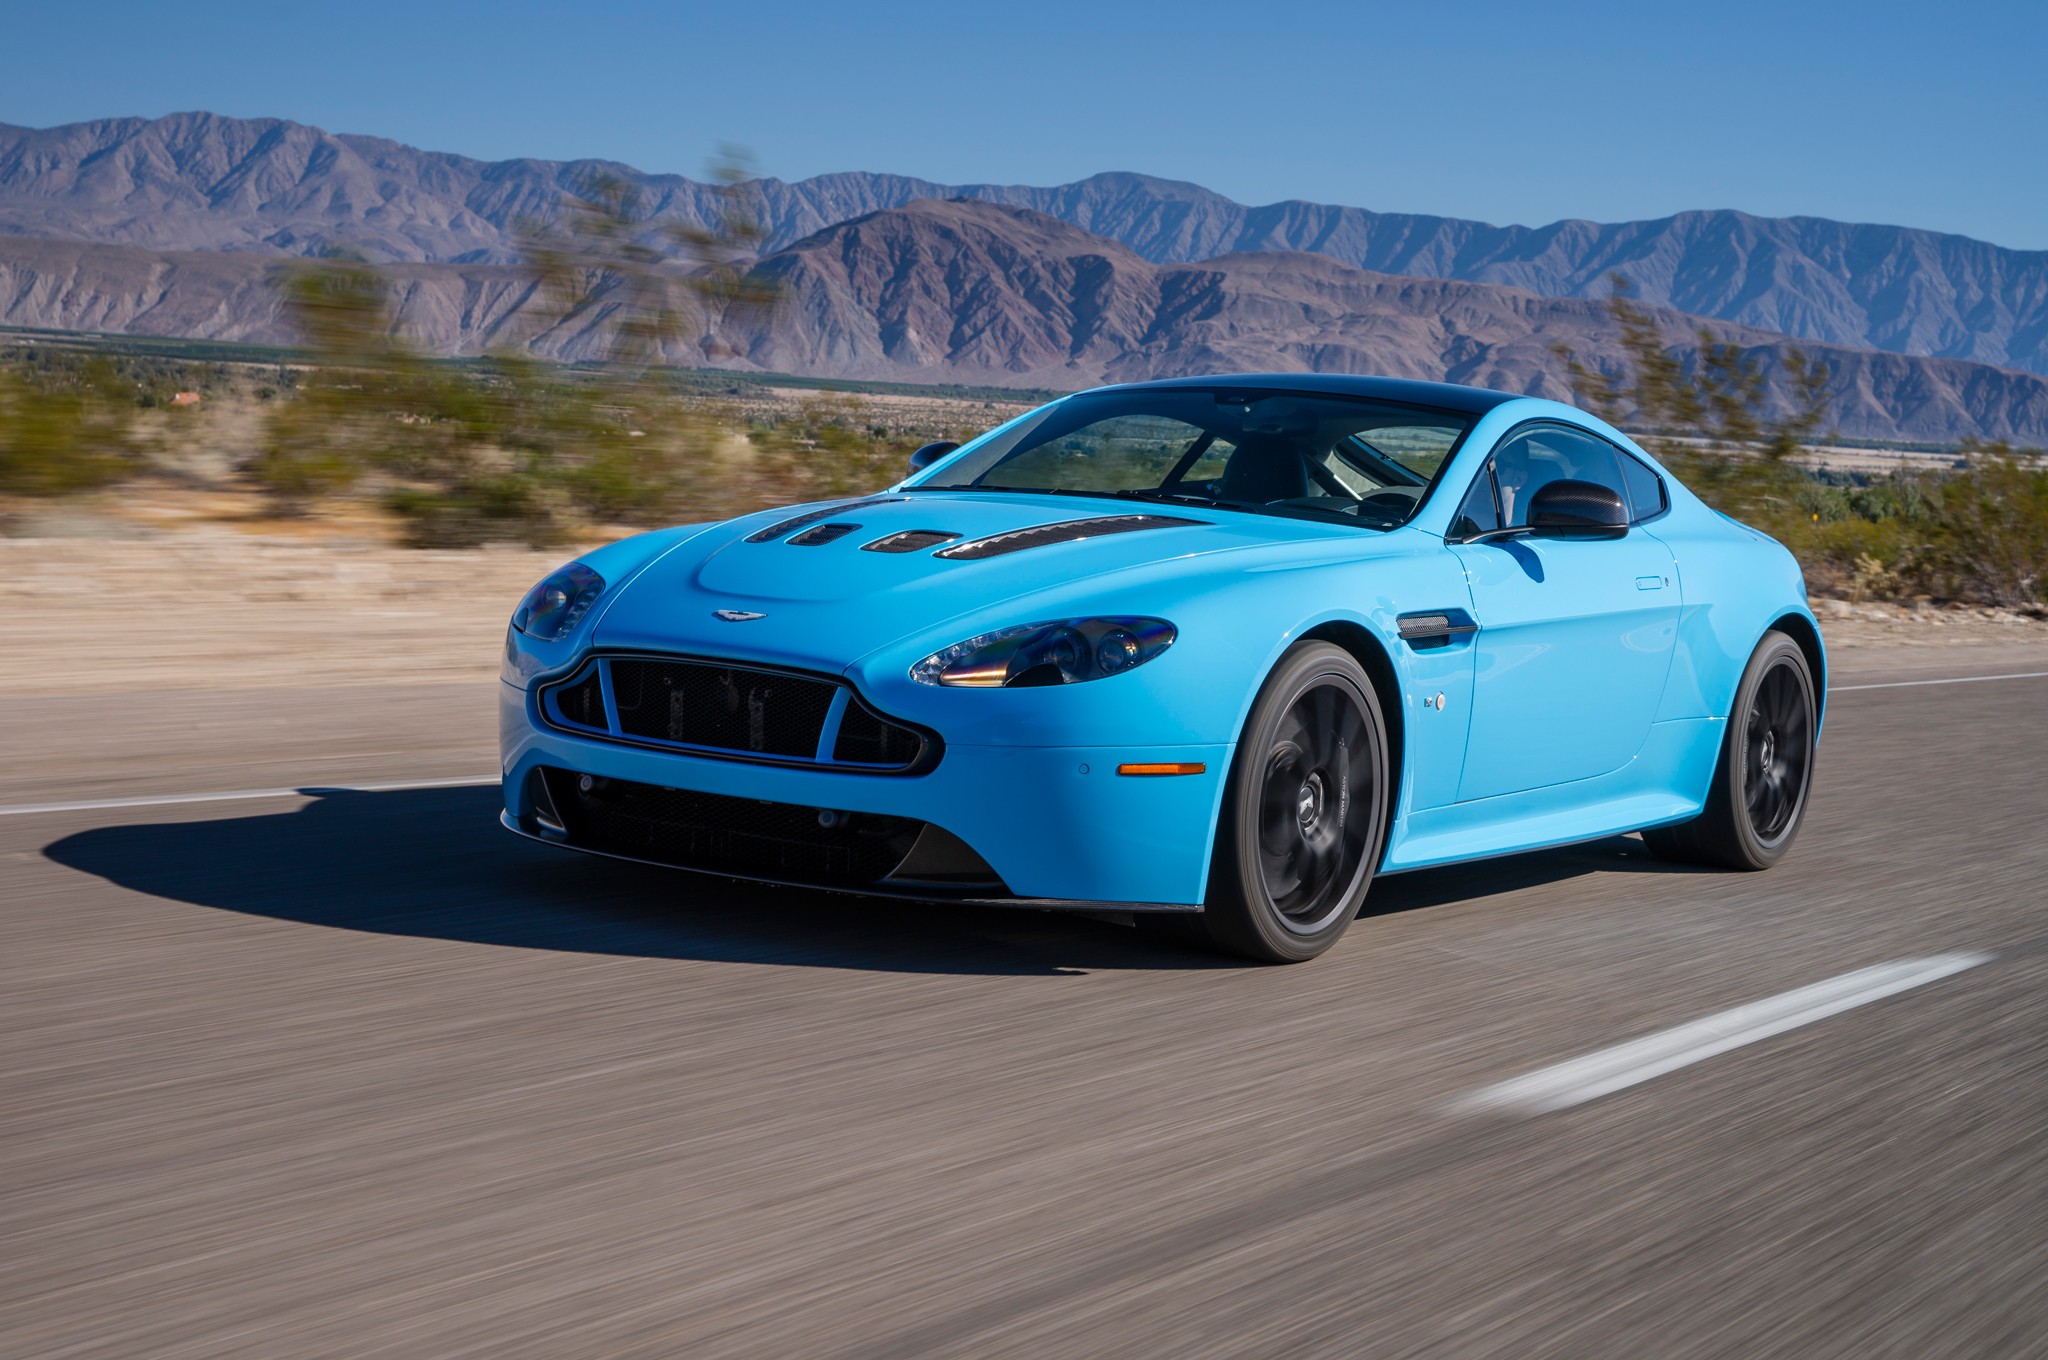 General 2048x1360 car luxury cars Aston Martin Aston Martin Vantage blue cars road asphalt landscape vehicle British cars